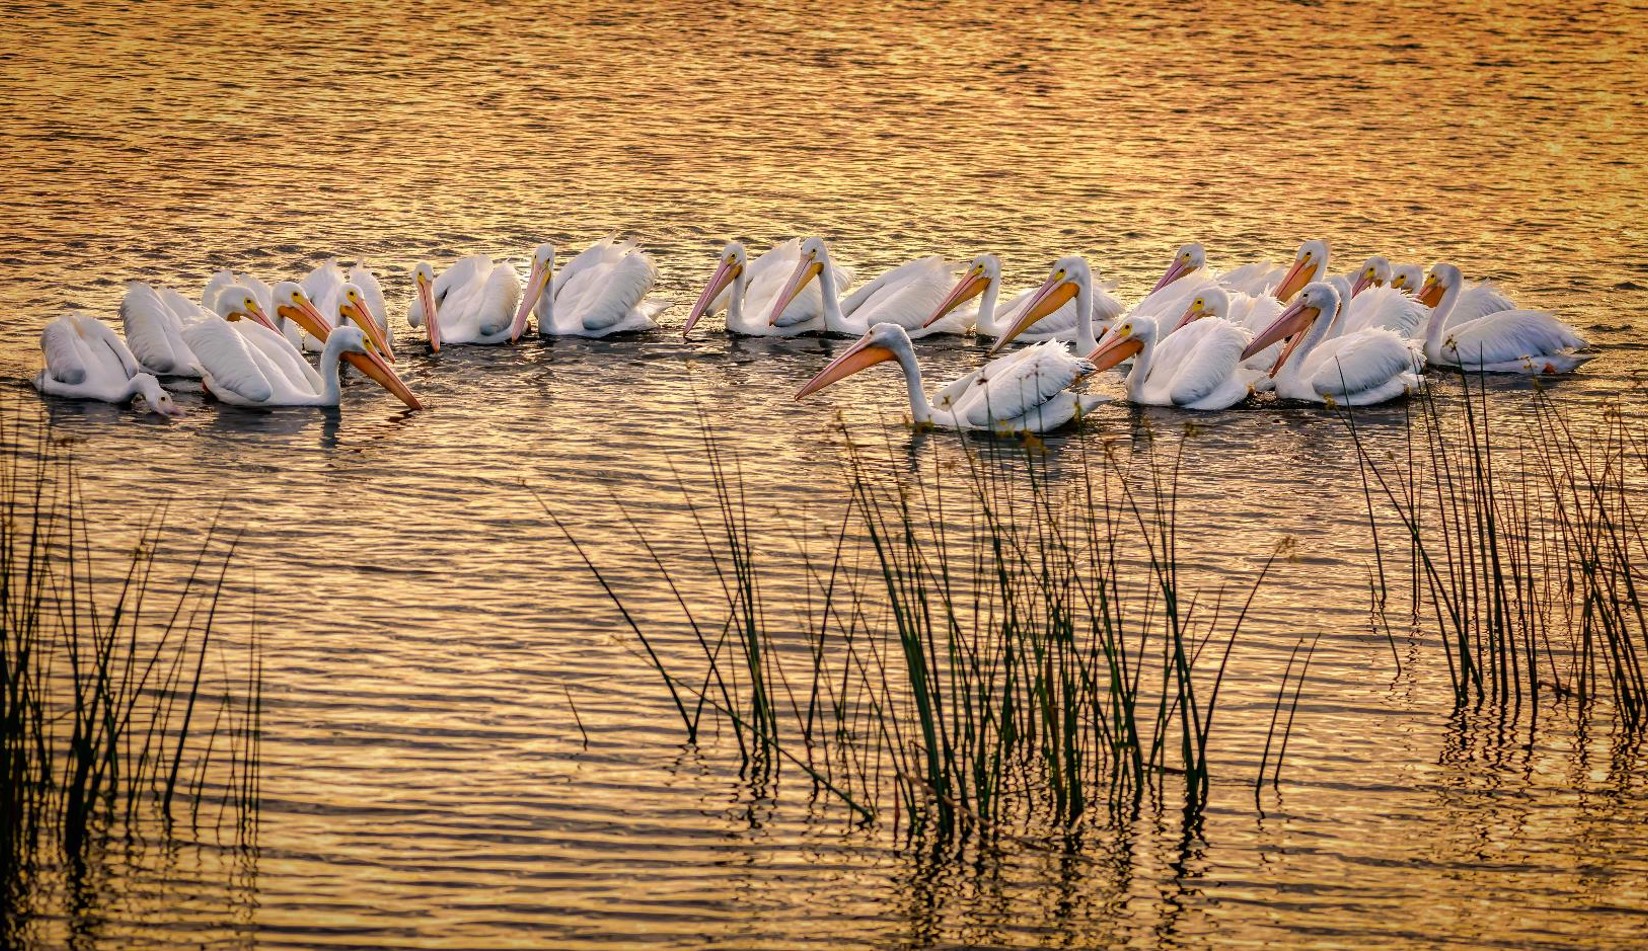 "White Pelican Sunset-American White Pelicans" Novice Honorable Mention: Donald Martin, Melbourne